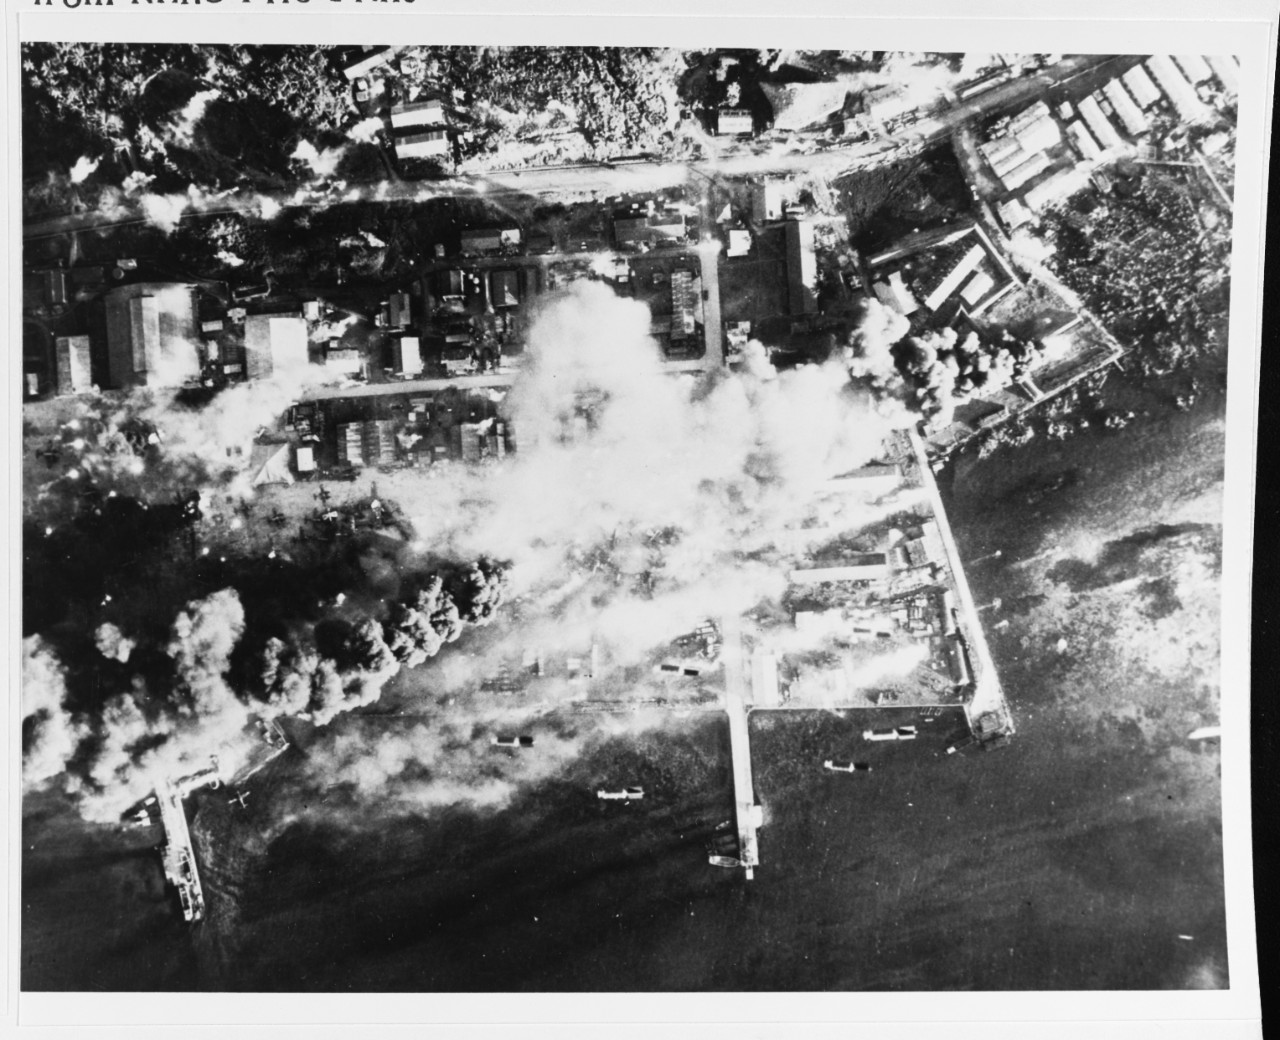 Carrier raid on Truk, 17-18 February 1944.